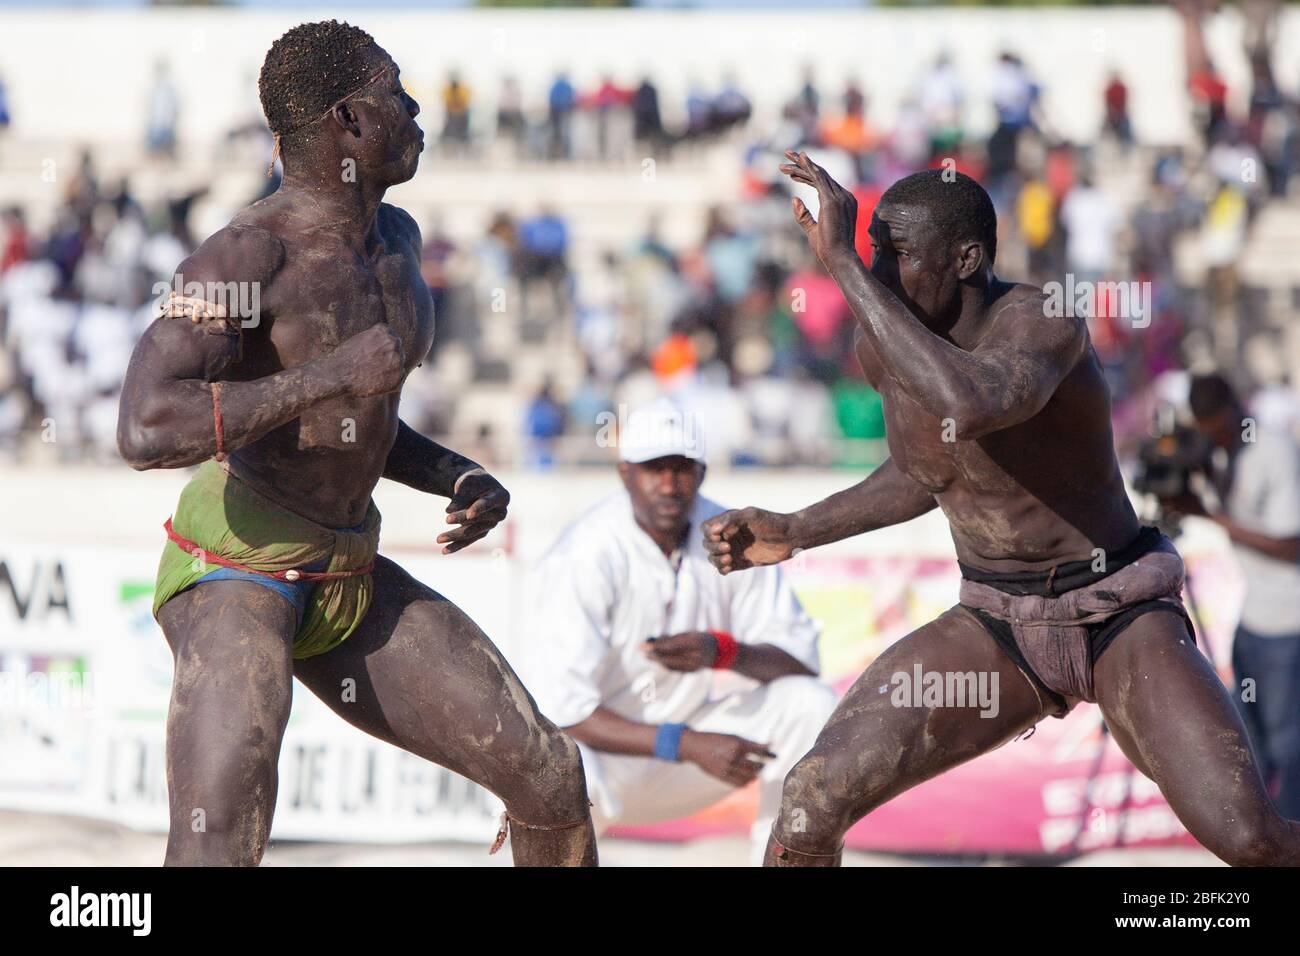 Wrestlers duking it out in Dakar, Senegal. Stock Photo